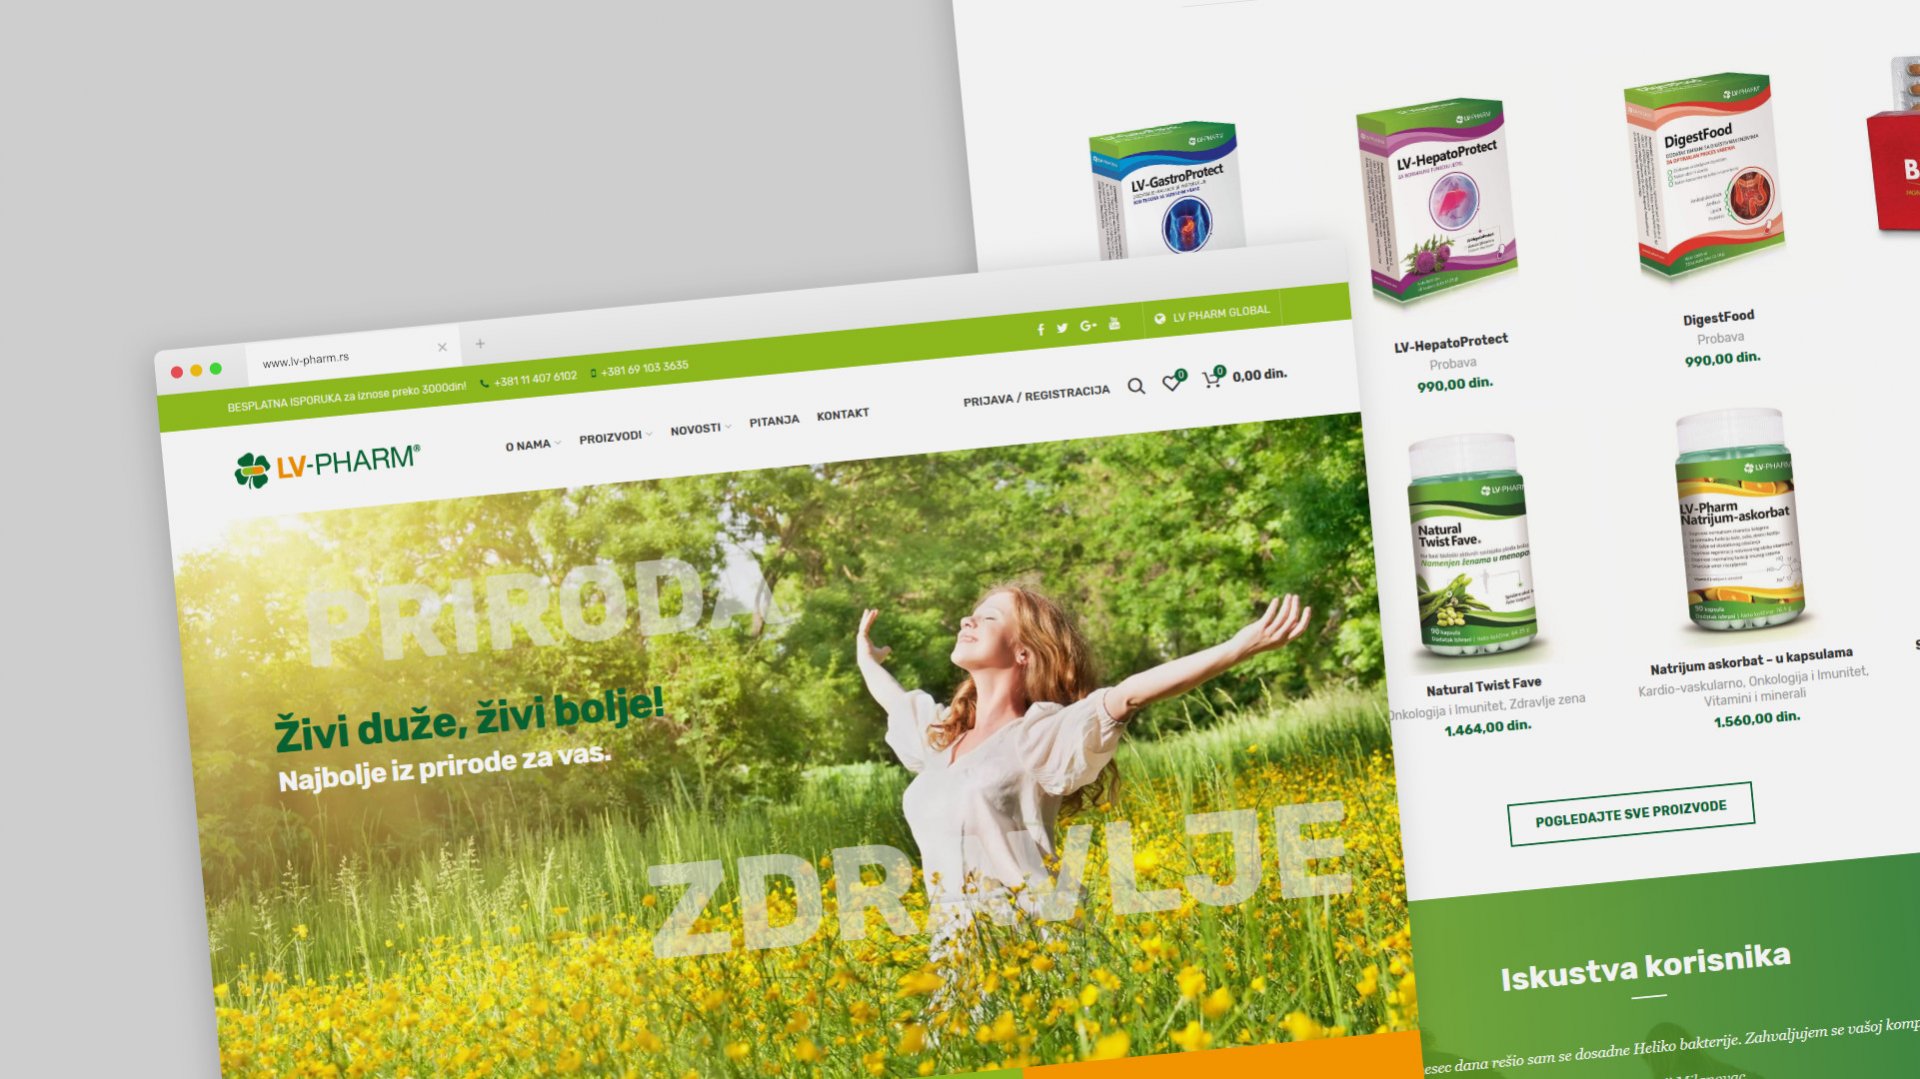 Natural remedies website redesign